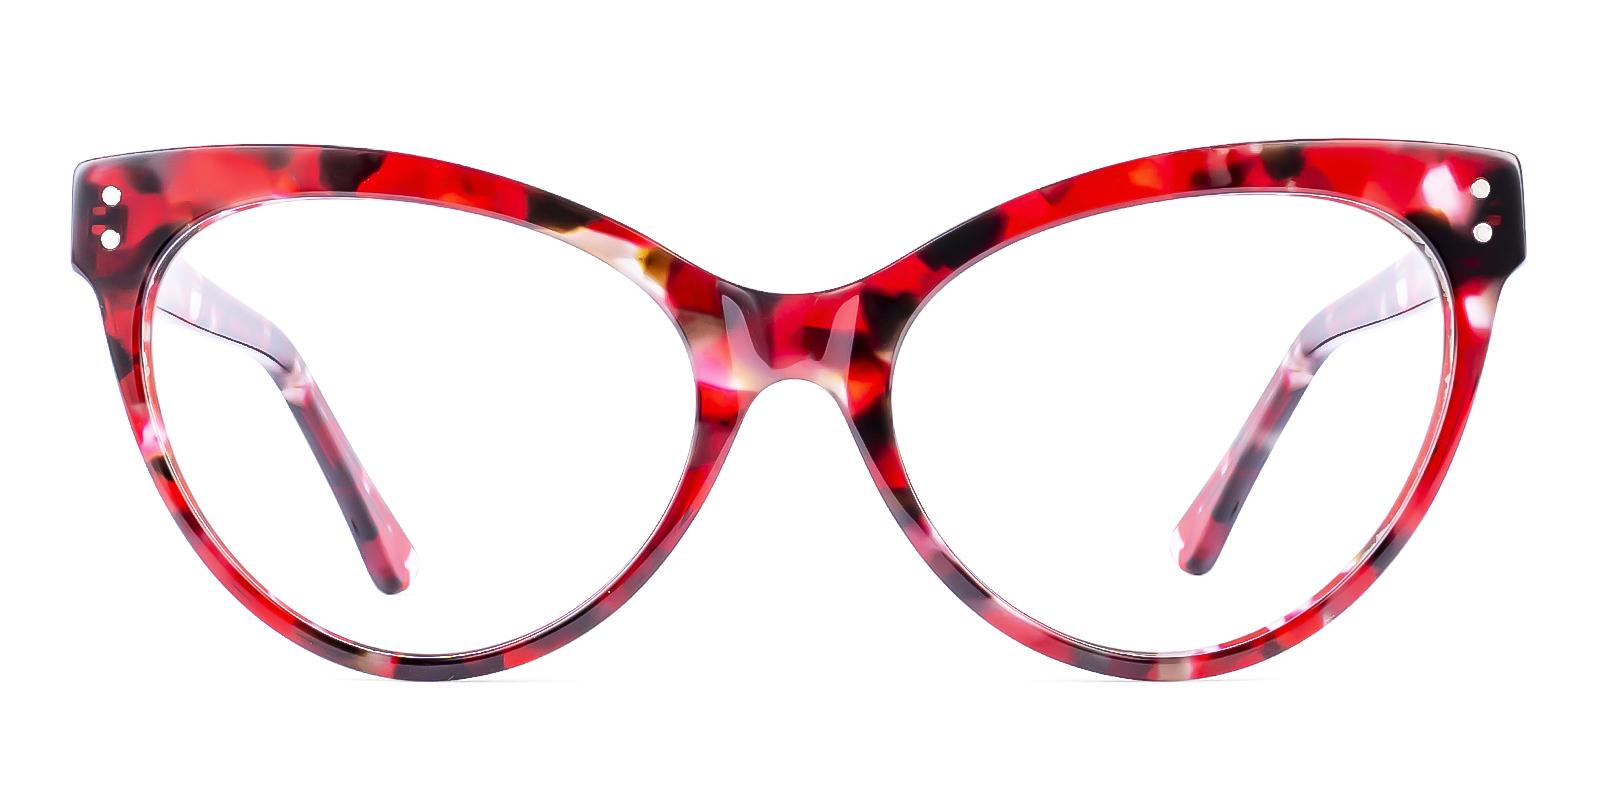 Airness Red Acetate Eyeglasses , SpringHinges , UniversalBridgeFit Frames from ABBE Glasses